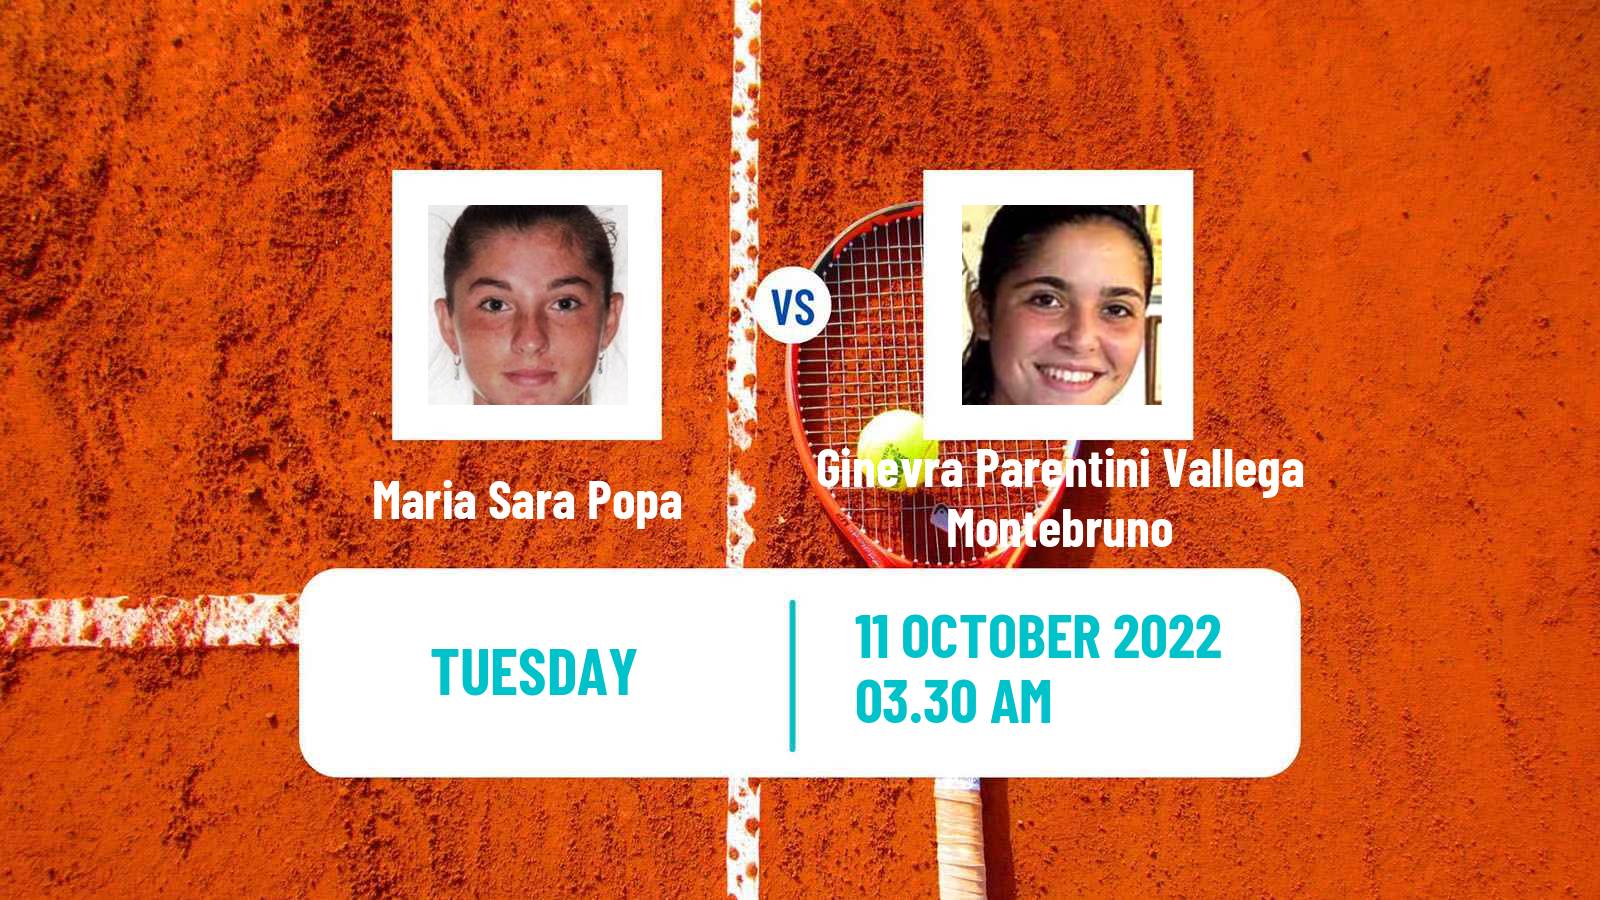 Tennis ITF Tournaments Maria Sara Popa - Ginevra Parentini Vallega Montebruno